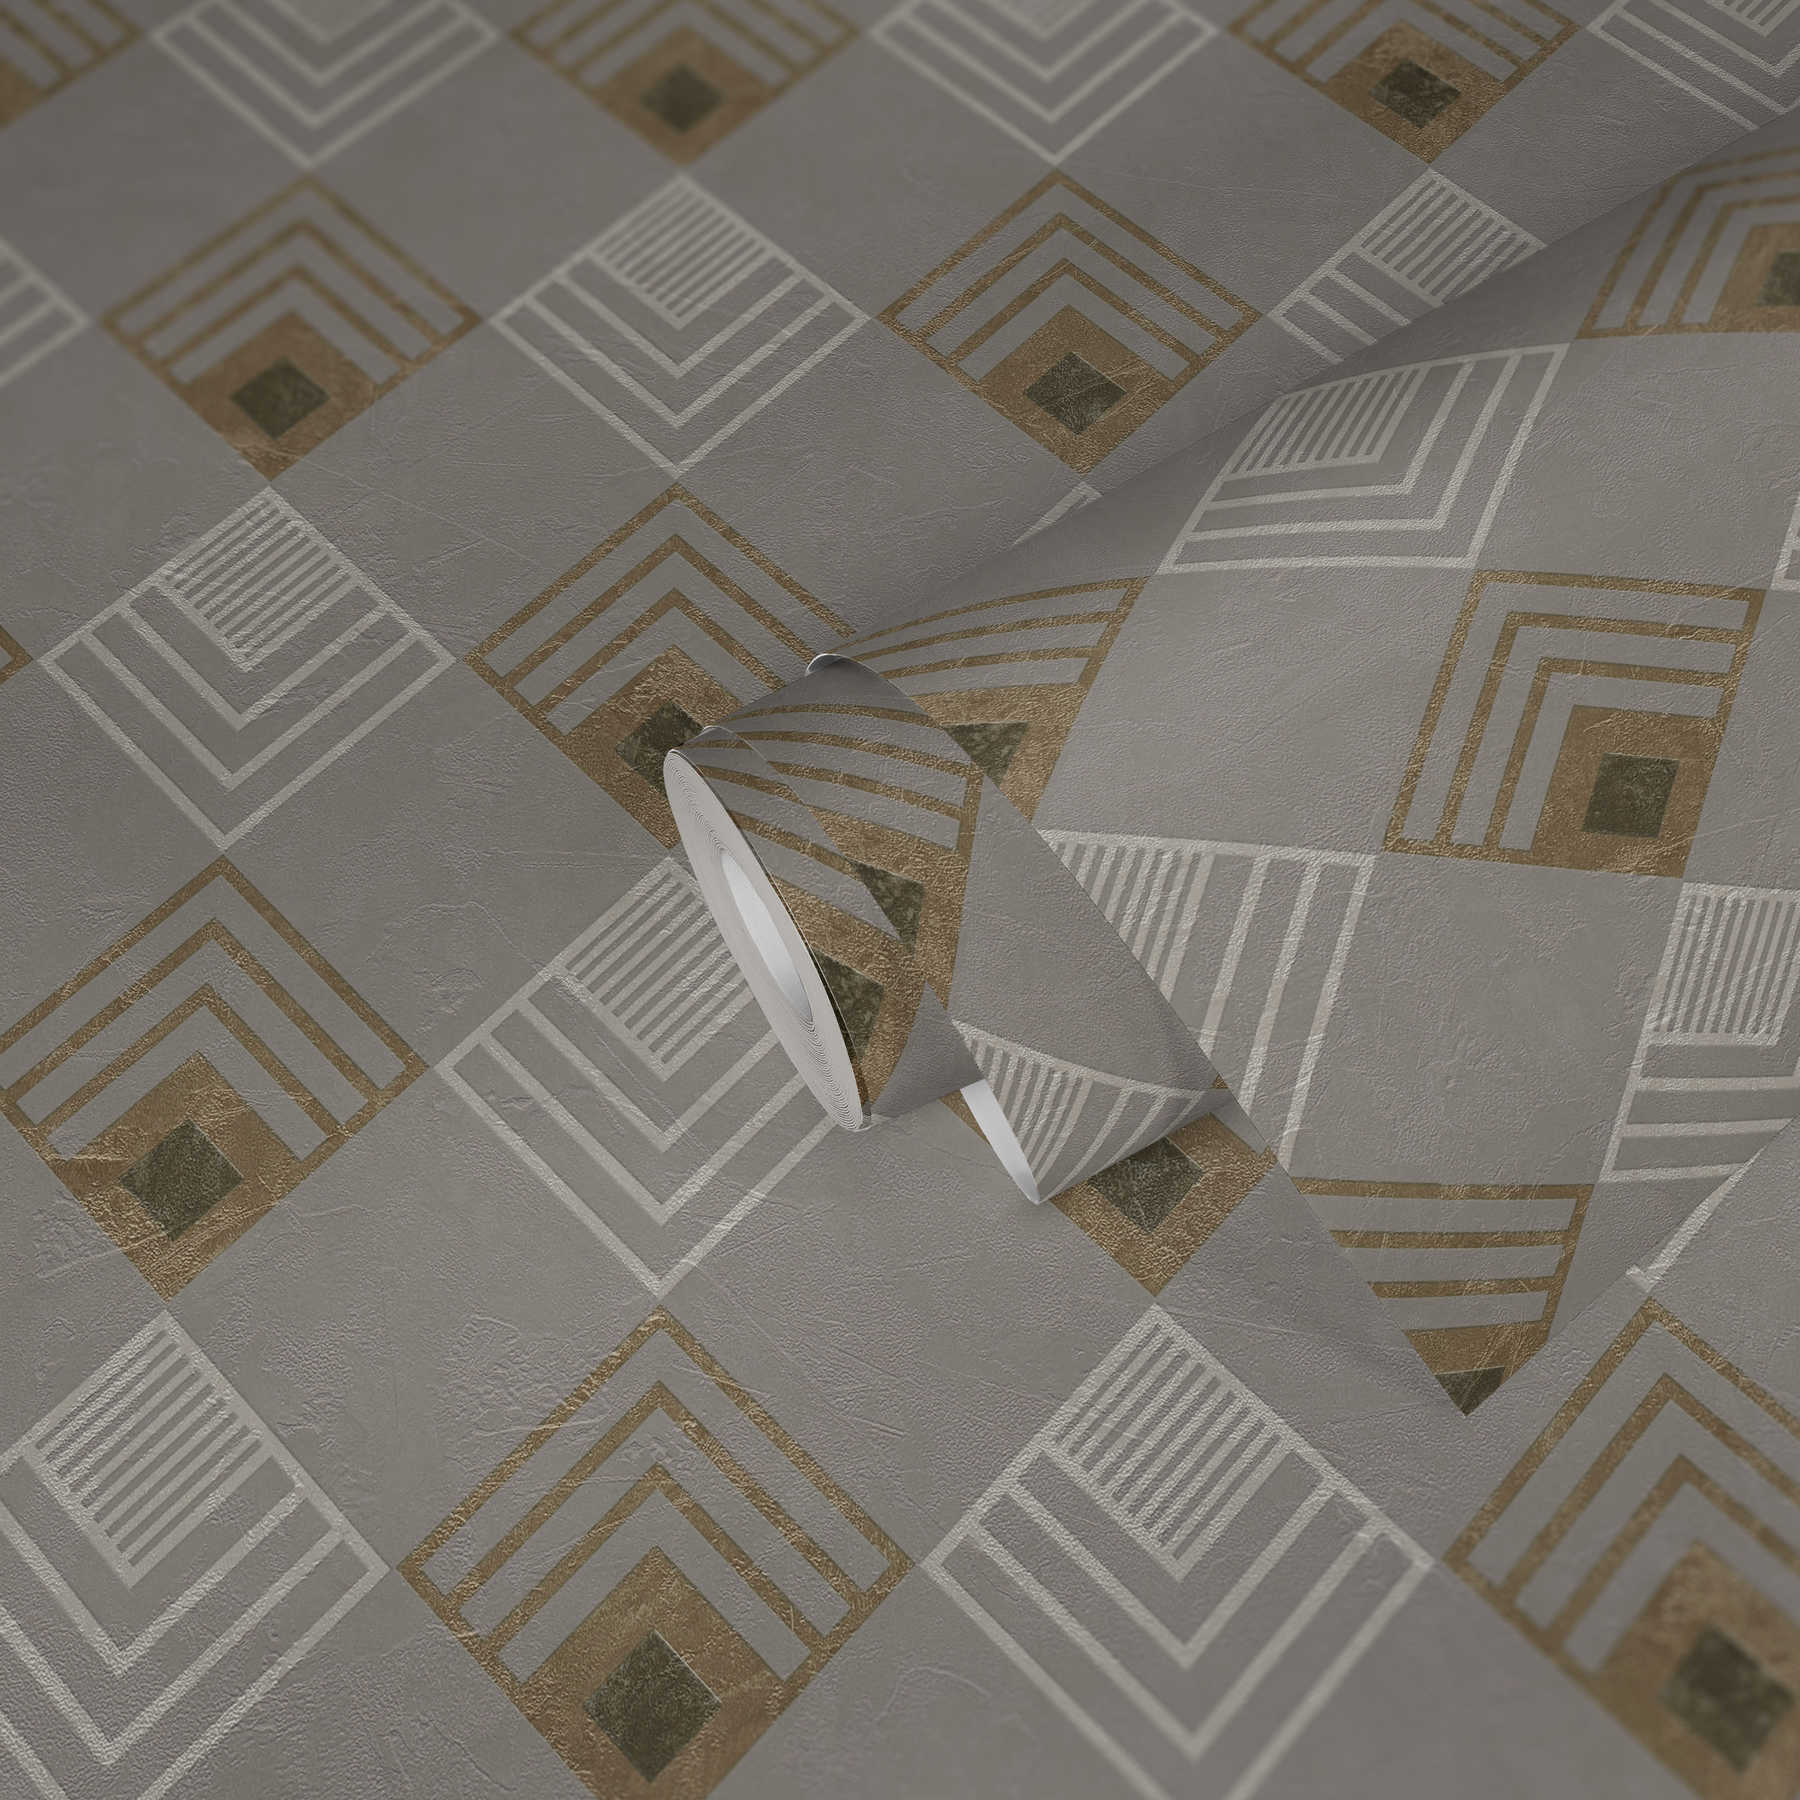             Vliestapete Art Déco Muster, Metallic-Effekt – Grau, Beige, Weiß
        